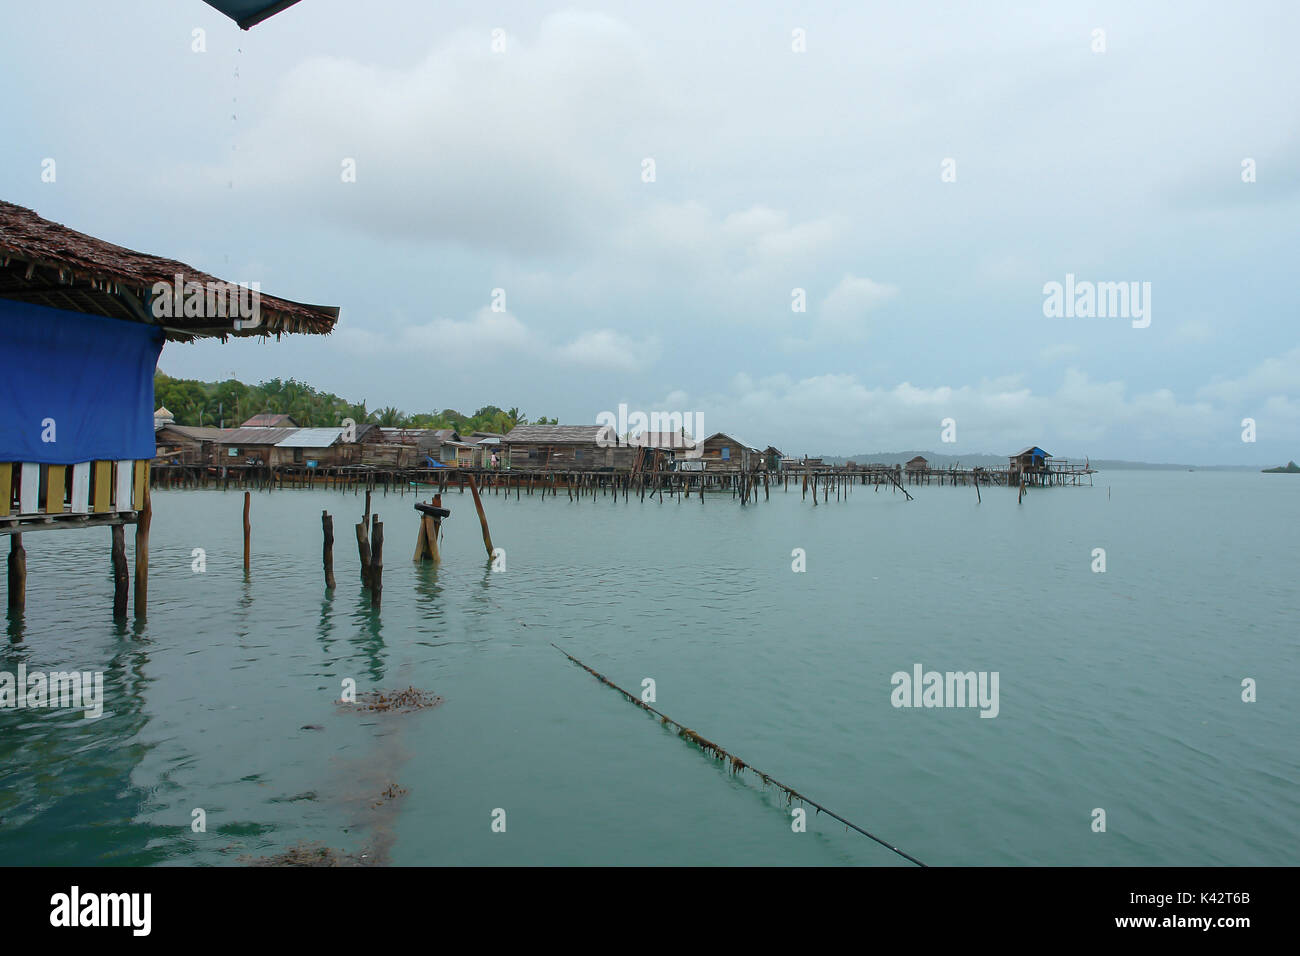 village on stilts, Rial Islands, sumatera, Indonesia Stock Photo